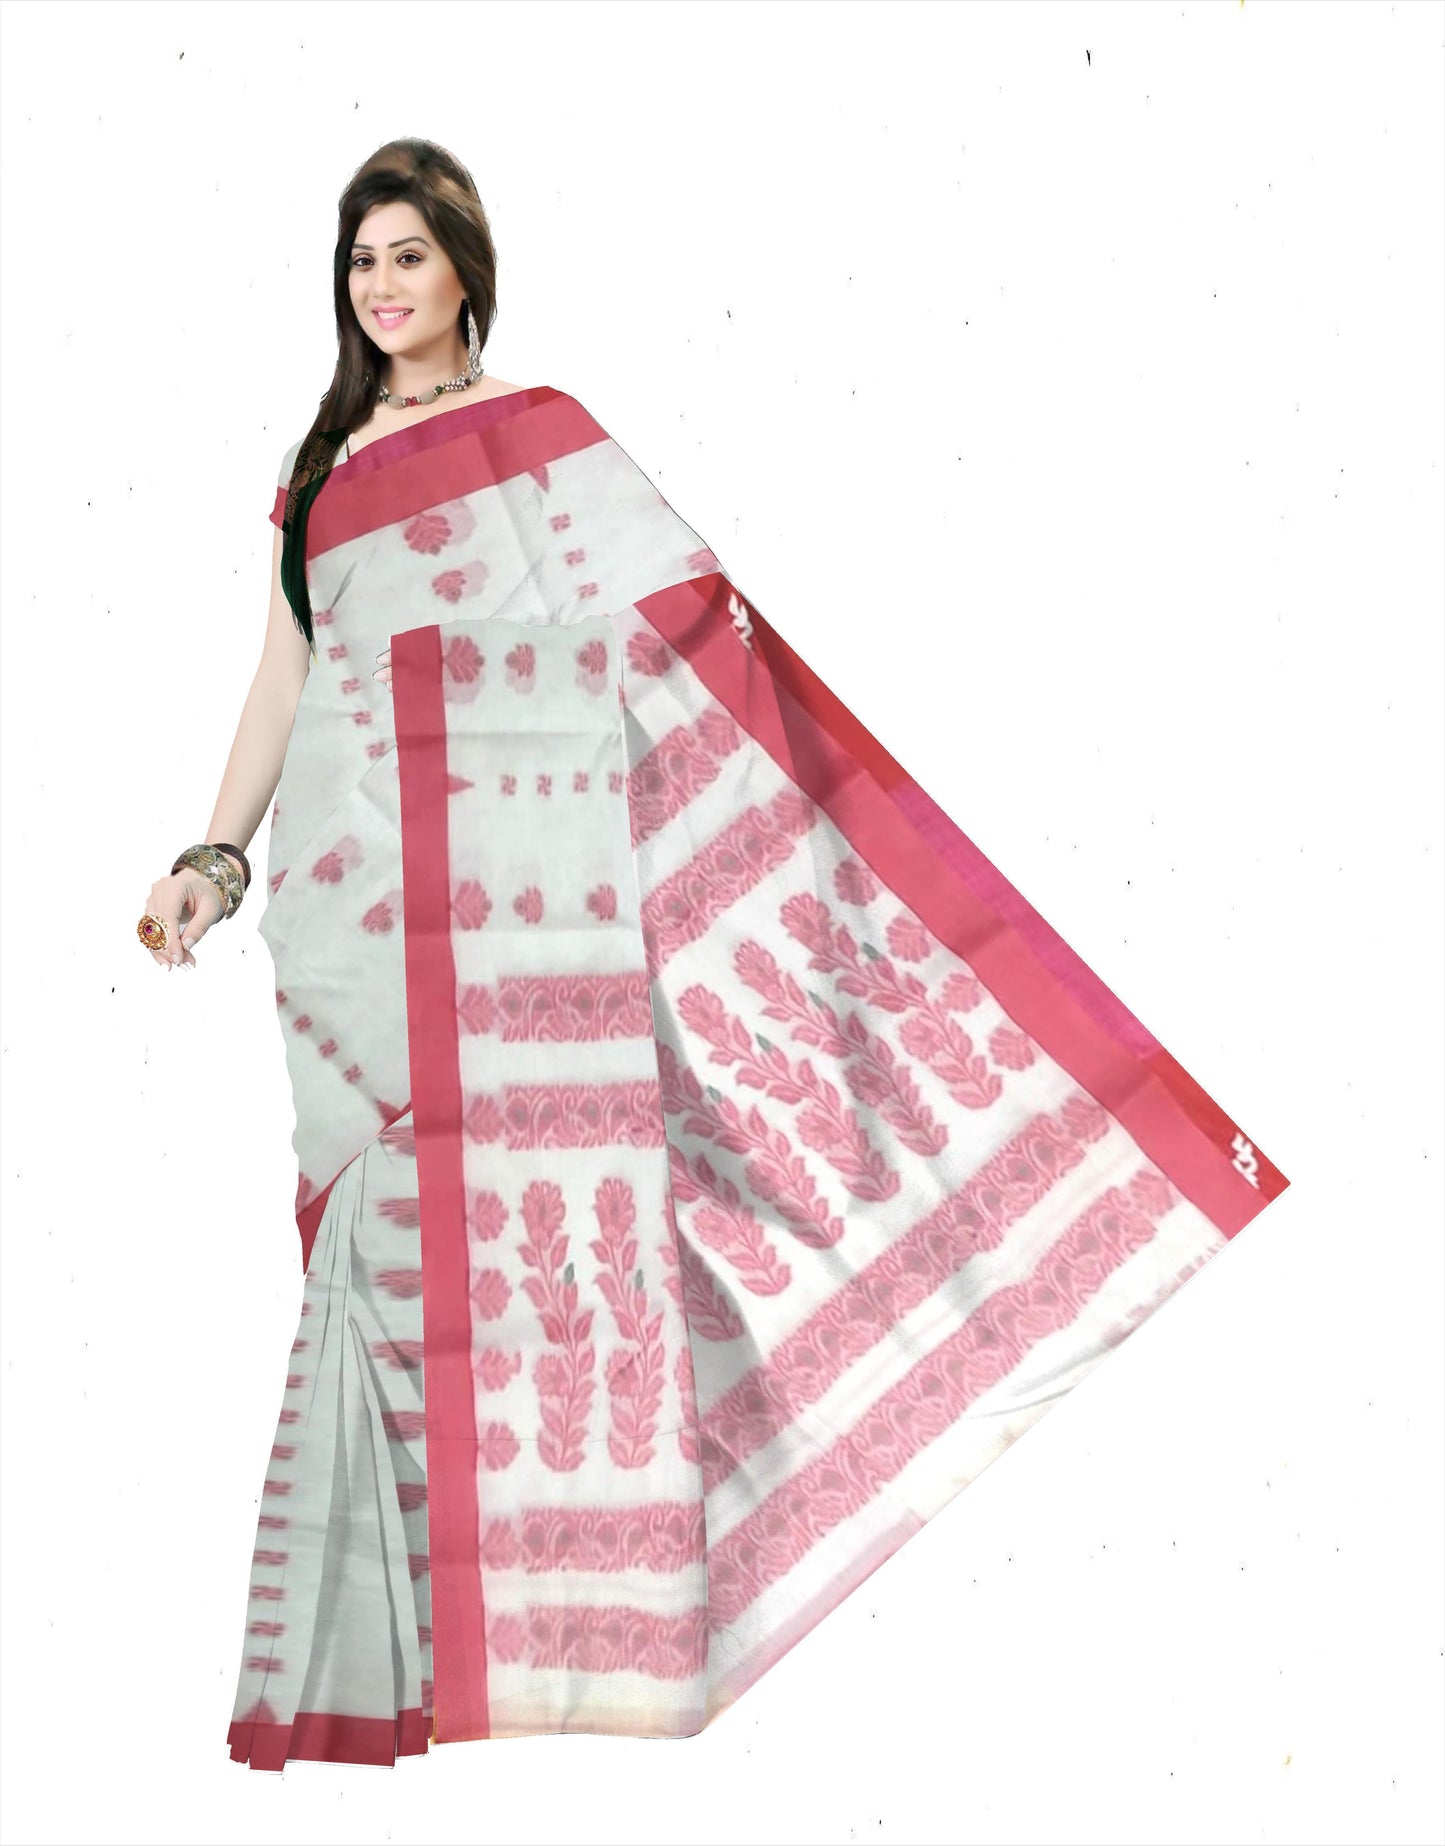 Pradip Fabrics Ethnic Women's Pure 100% Tant Cotton White Body and Red Border Saree